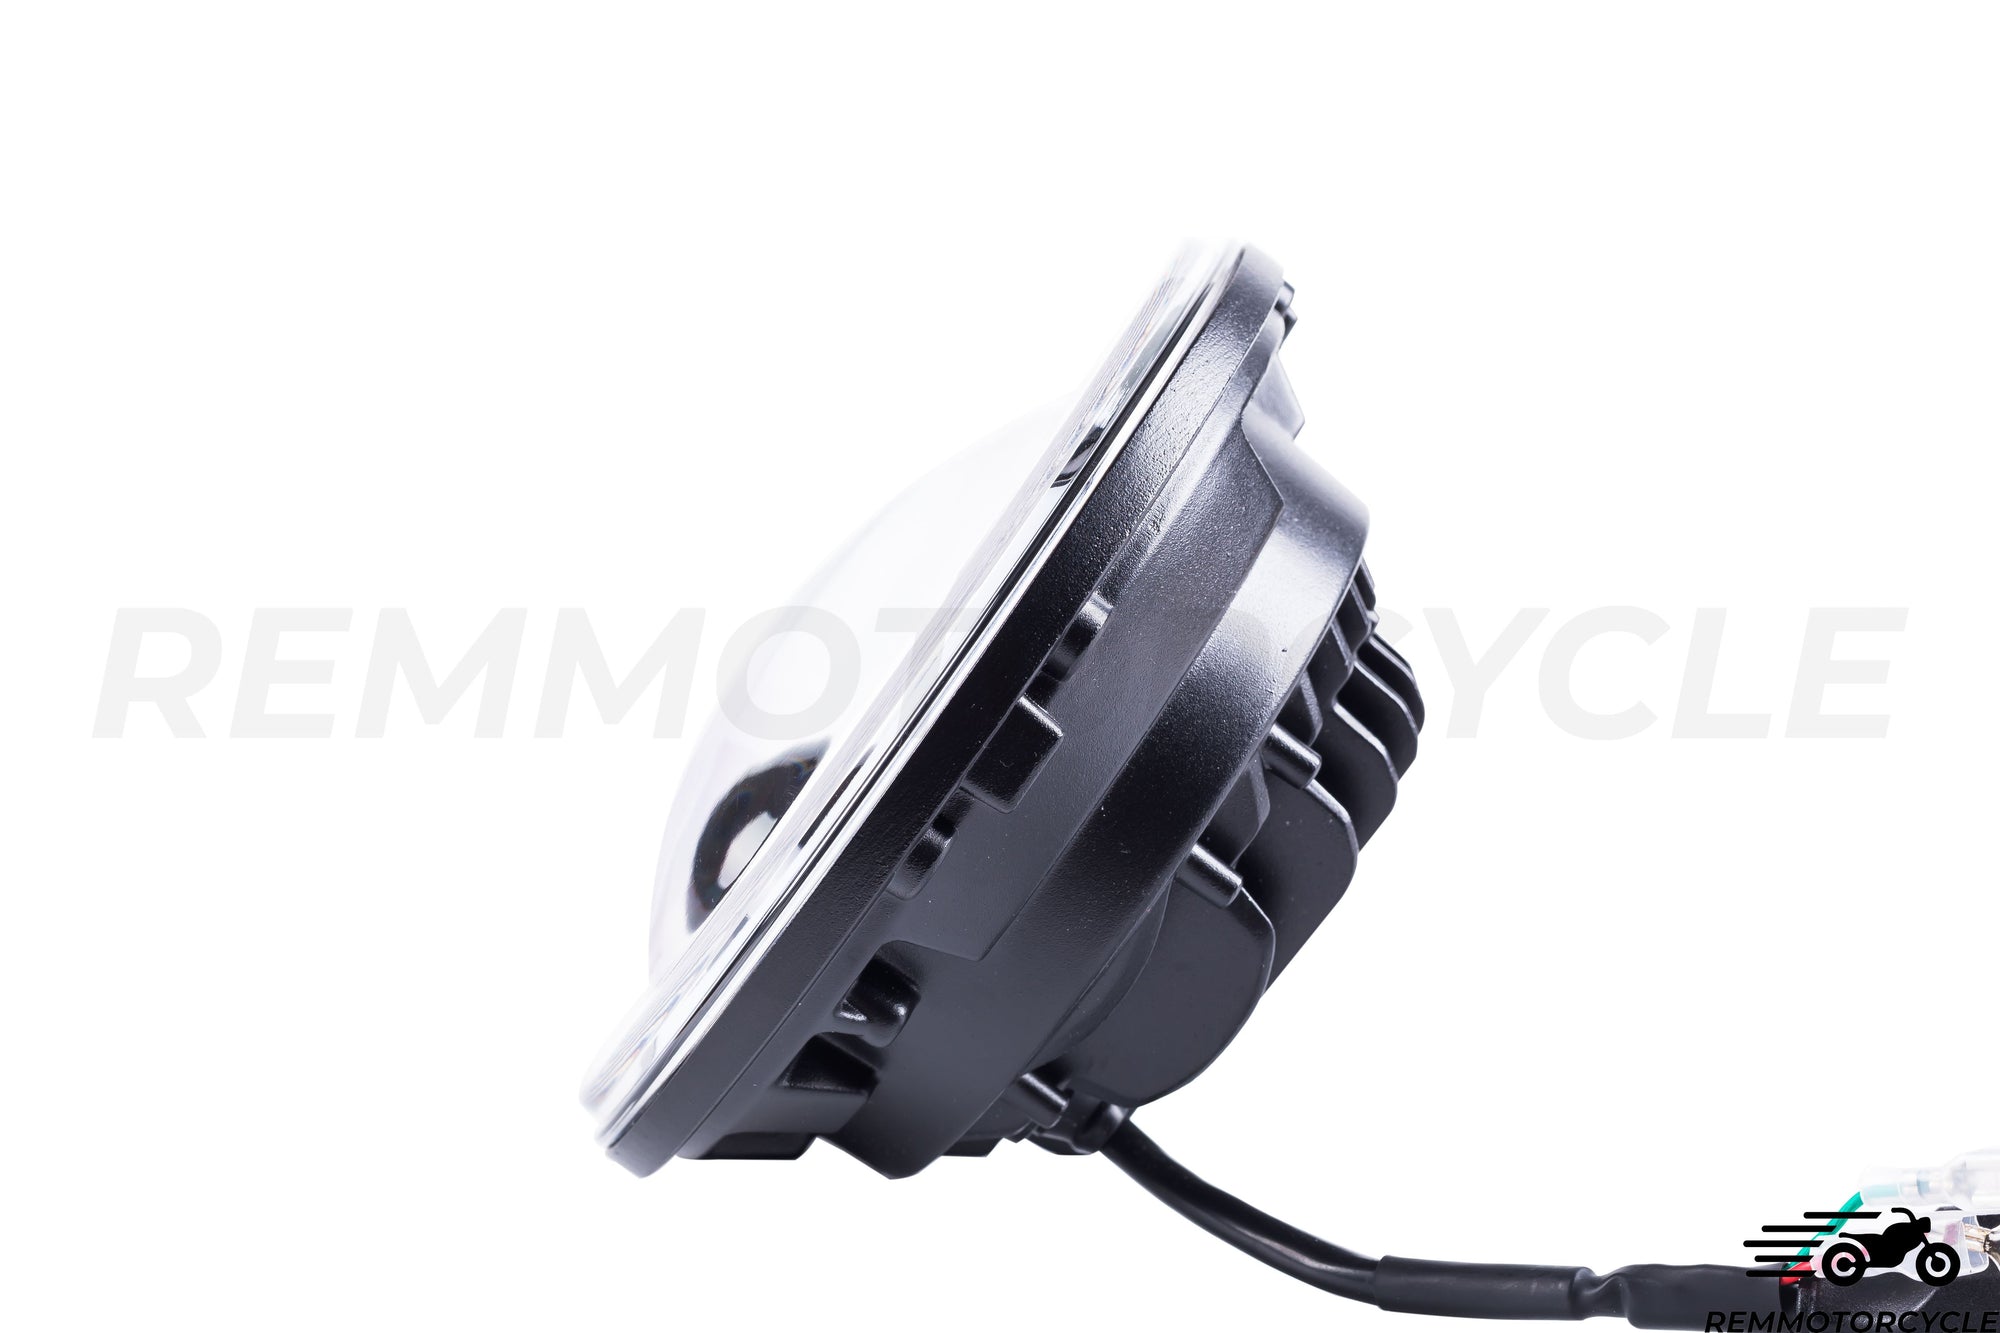 20 cm Multi Multi Multi Motorcycle LED -vuurtoren met geïntegreerde indicatoren